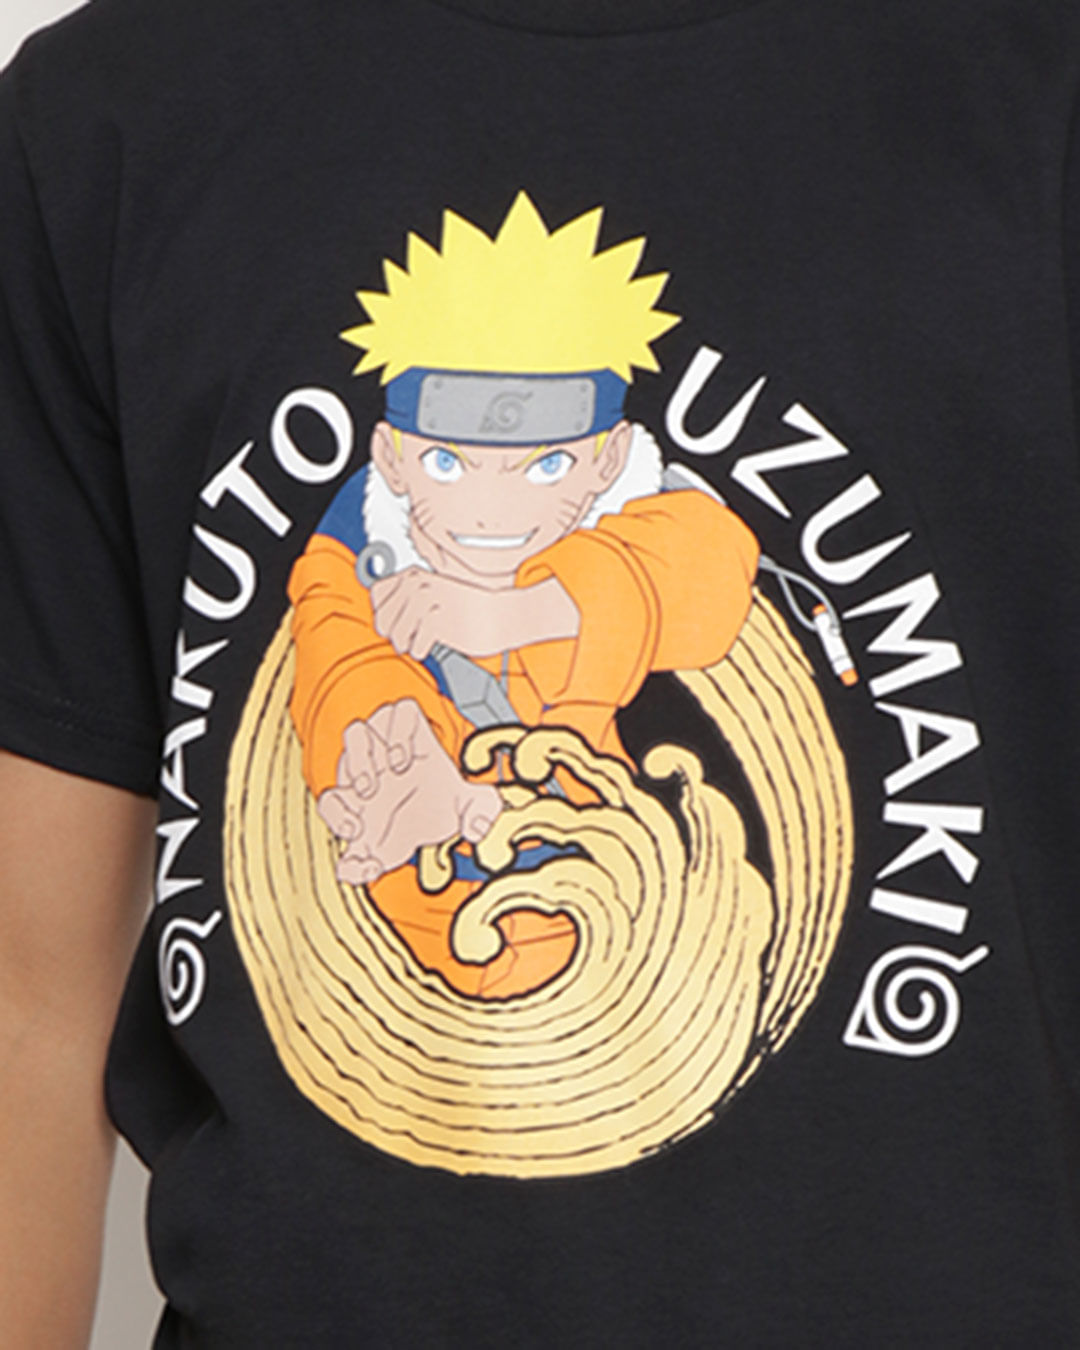 Camiseta-Juvenil-Naruto-Manga-Curta-Preta